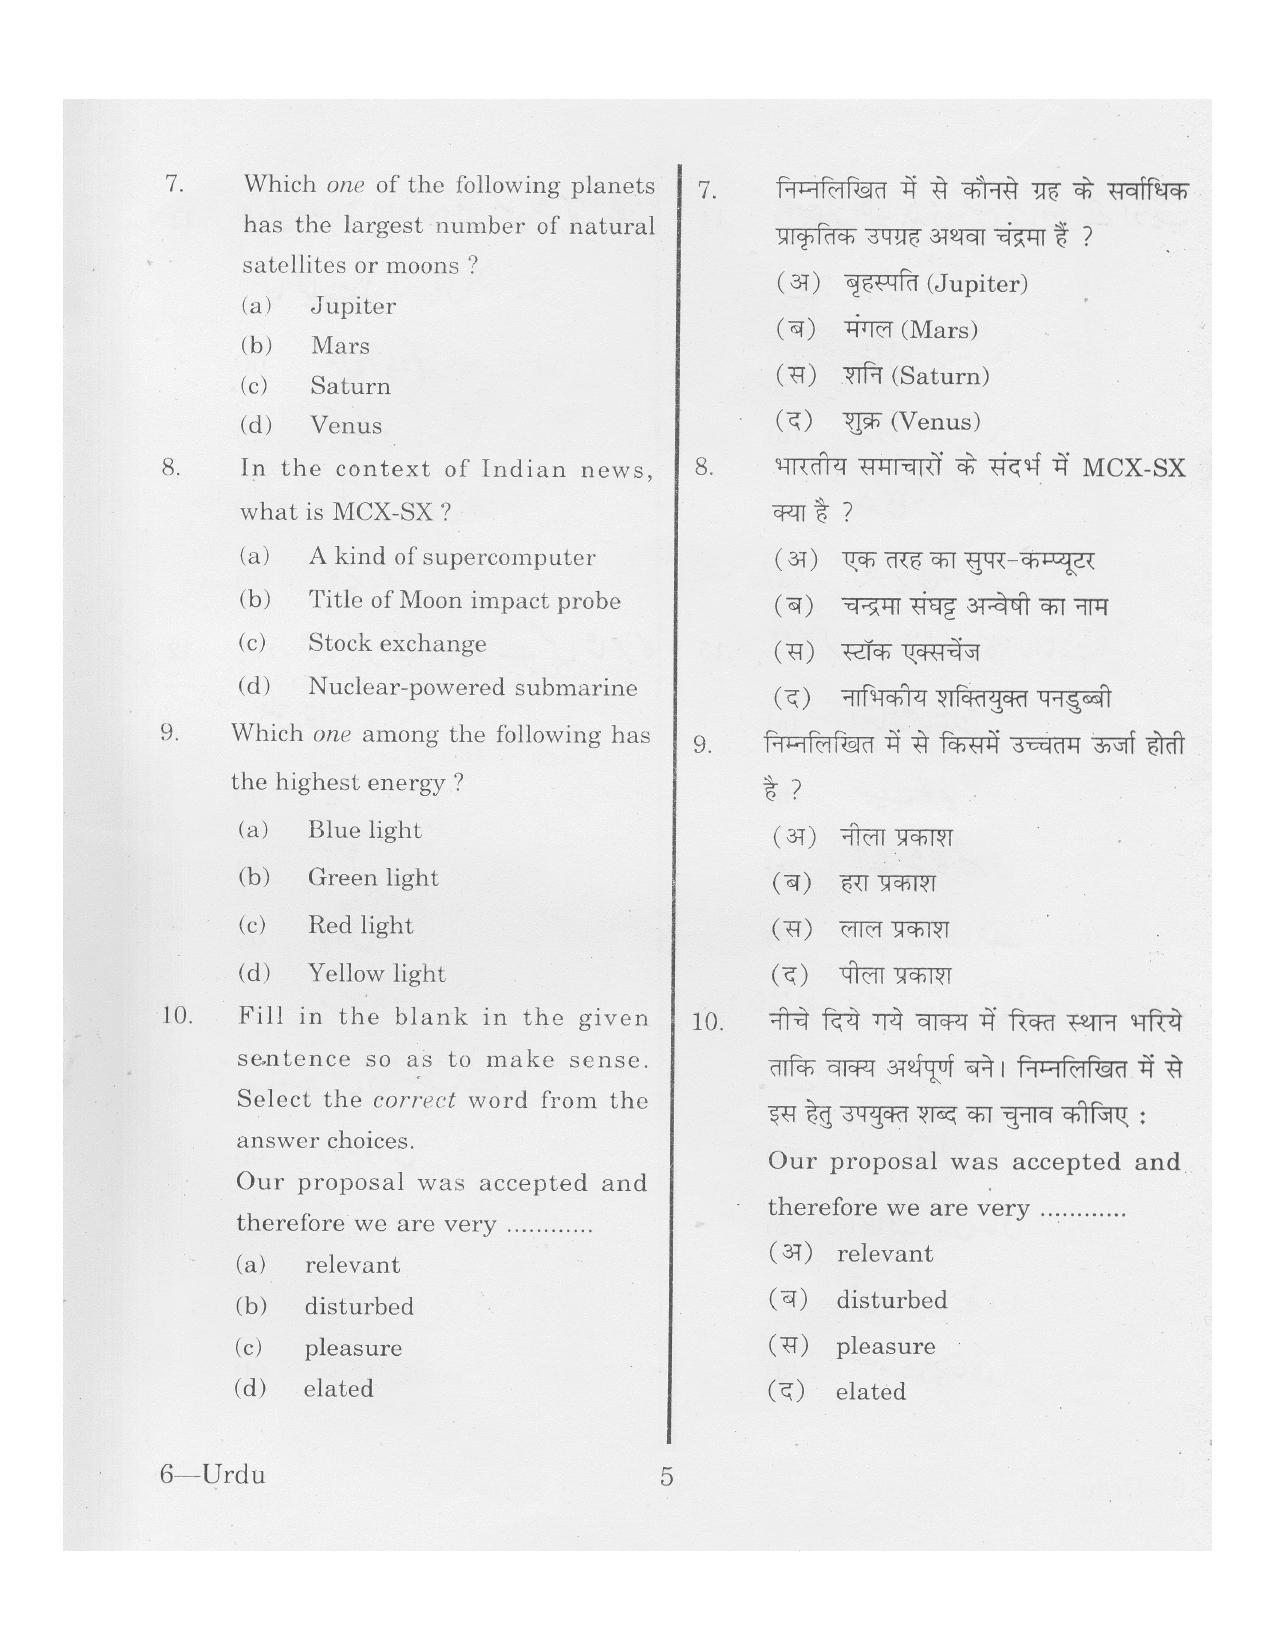 URATPG Urdu 2013 Question Paper - Page 4